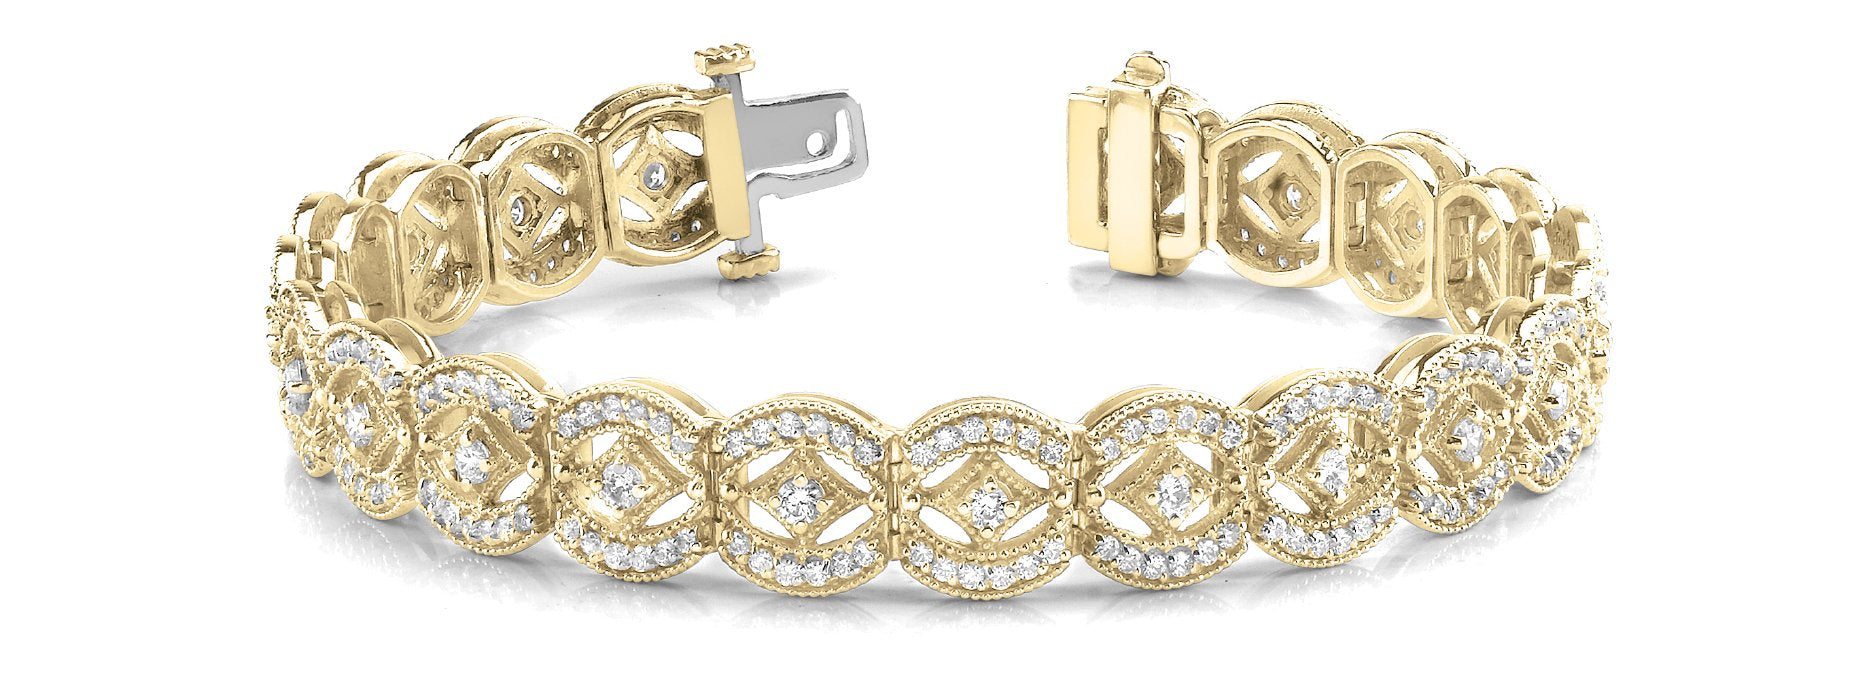 Fancy Diamond Bracelet Ladies 3.74ct tw - 14kt Yellow Gold